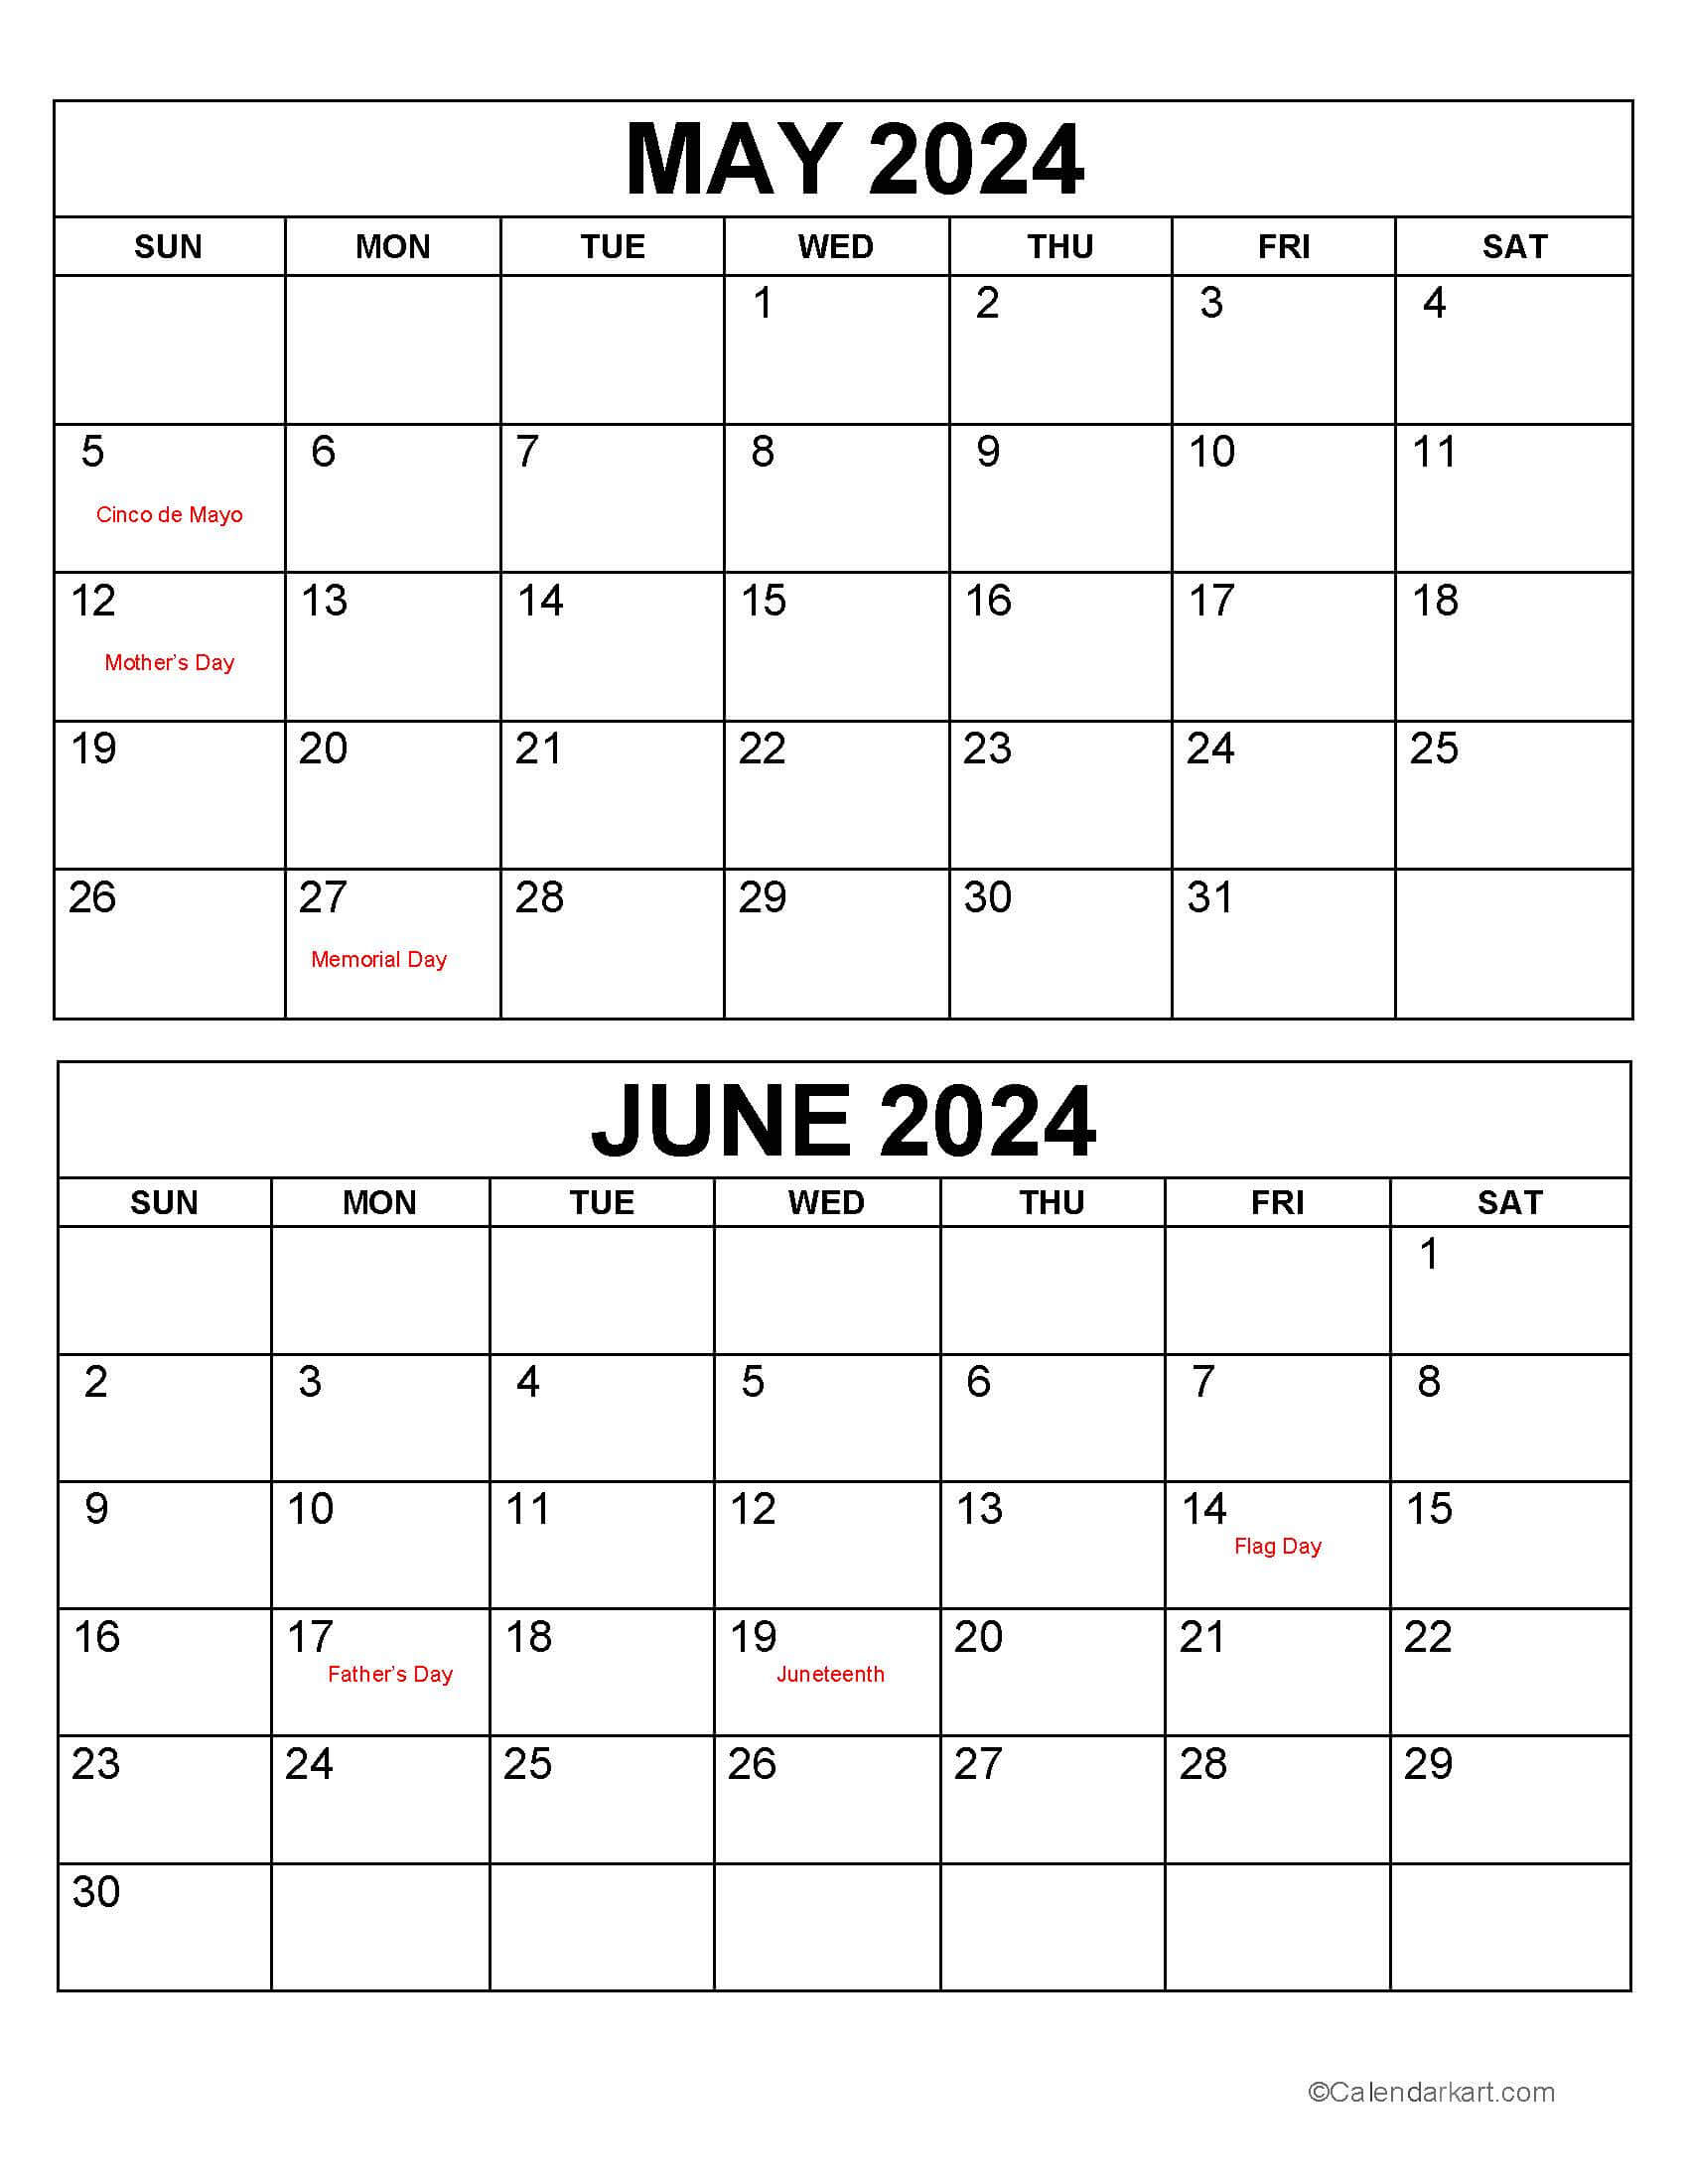 May June 2024 Calendars (3Rd Bi-Monthly) - Calendarkart | May June 2024 Calendar With Holidays